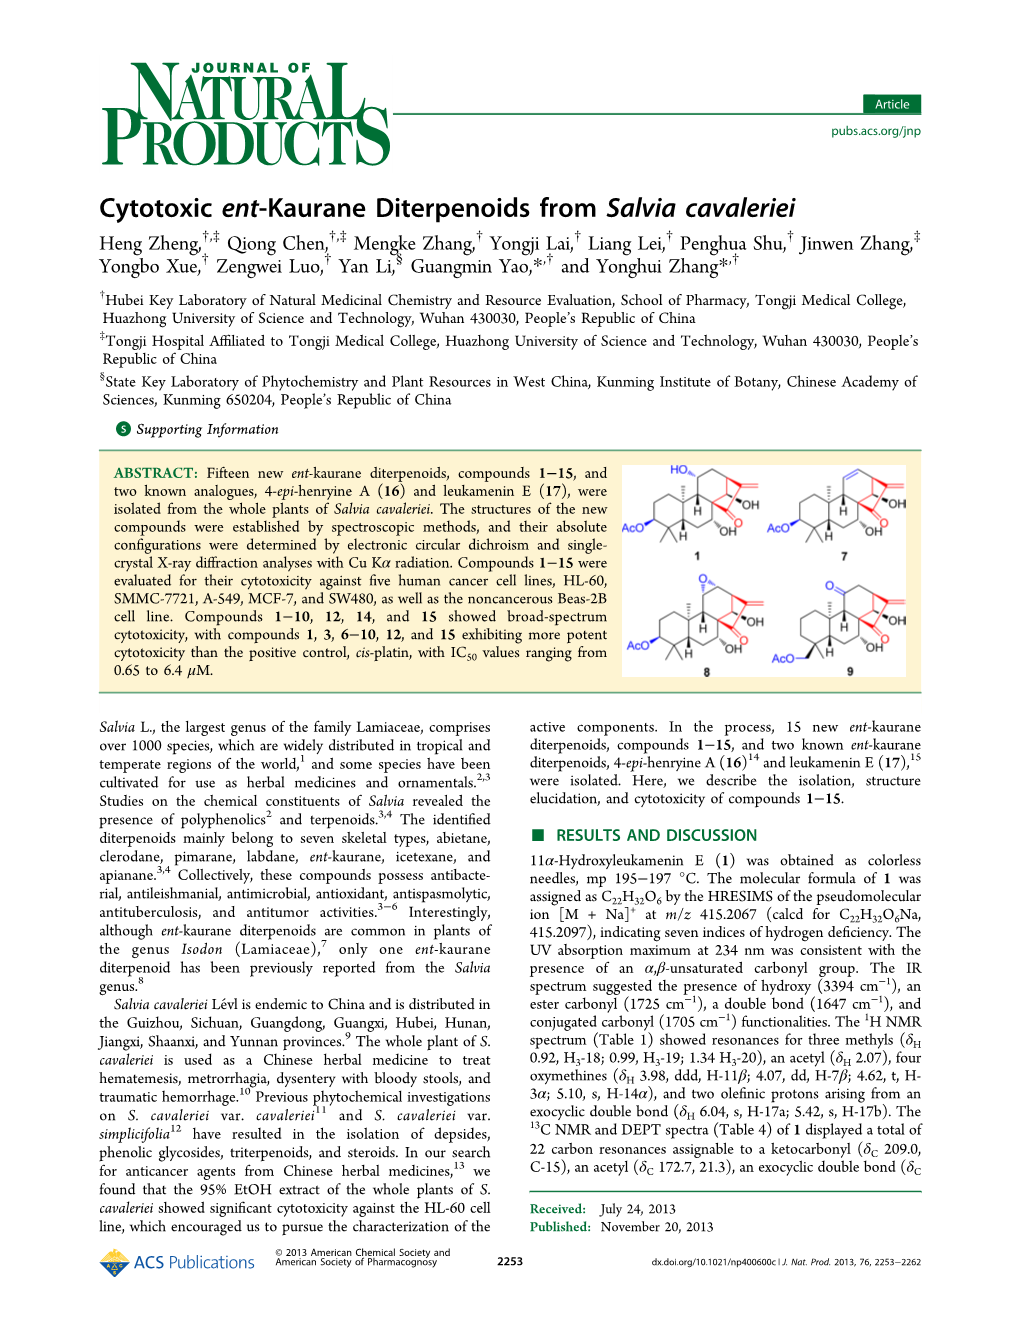 Cytotoxic Ent-Kaurane Diterpenoids from Salvia Cavaleriei